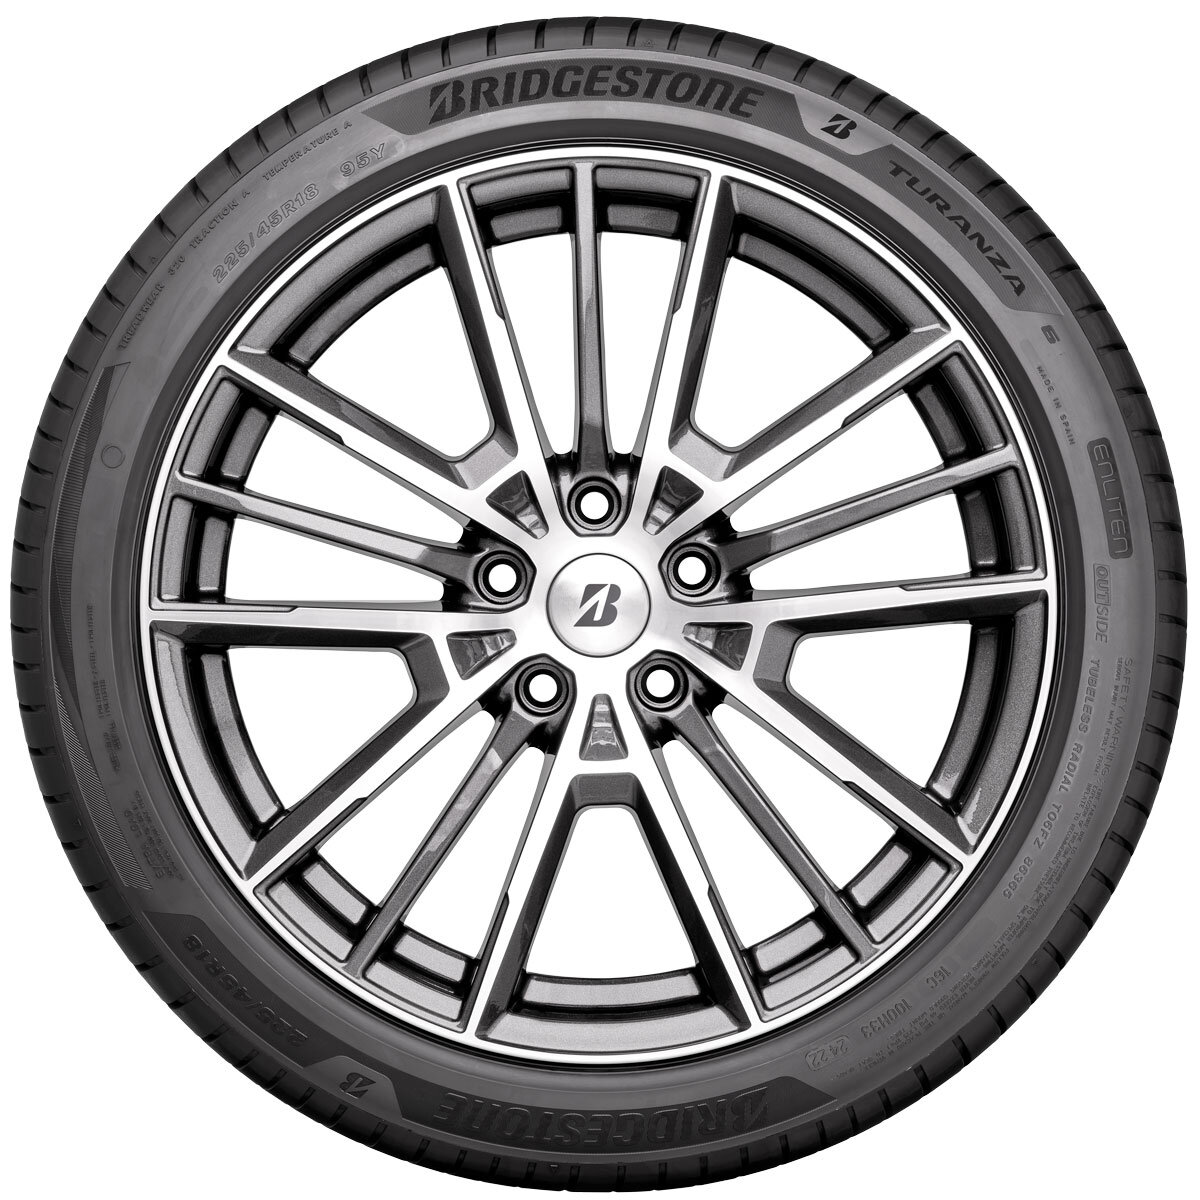 Bridgestone 195/55 R16 V (87) TURANZA TUR6